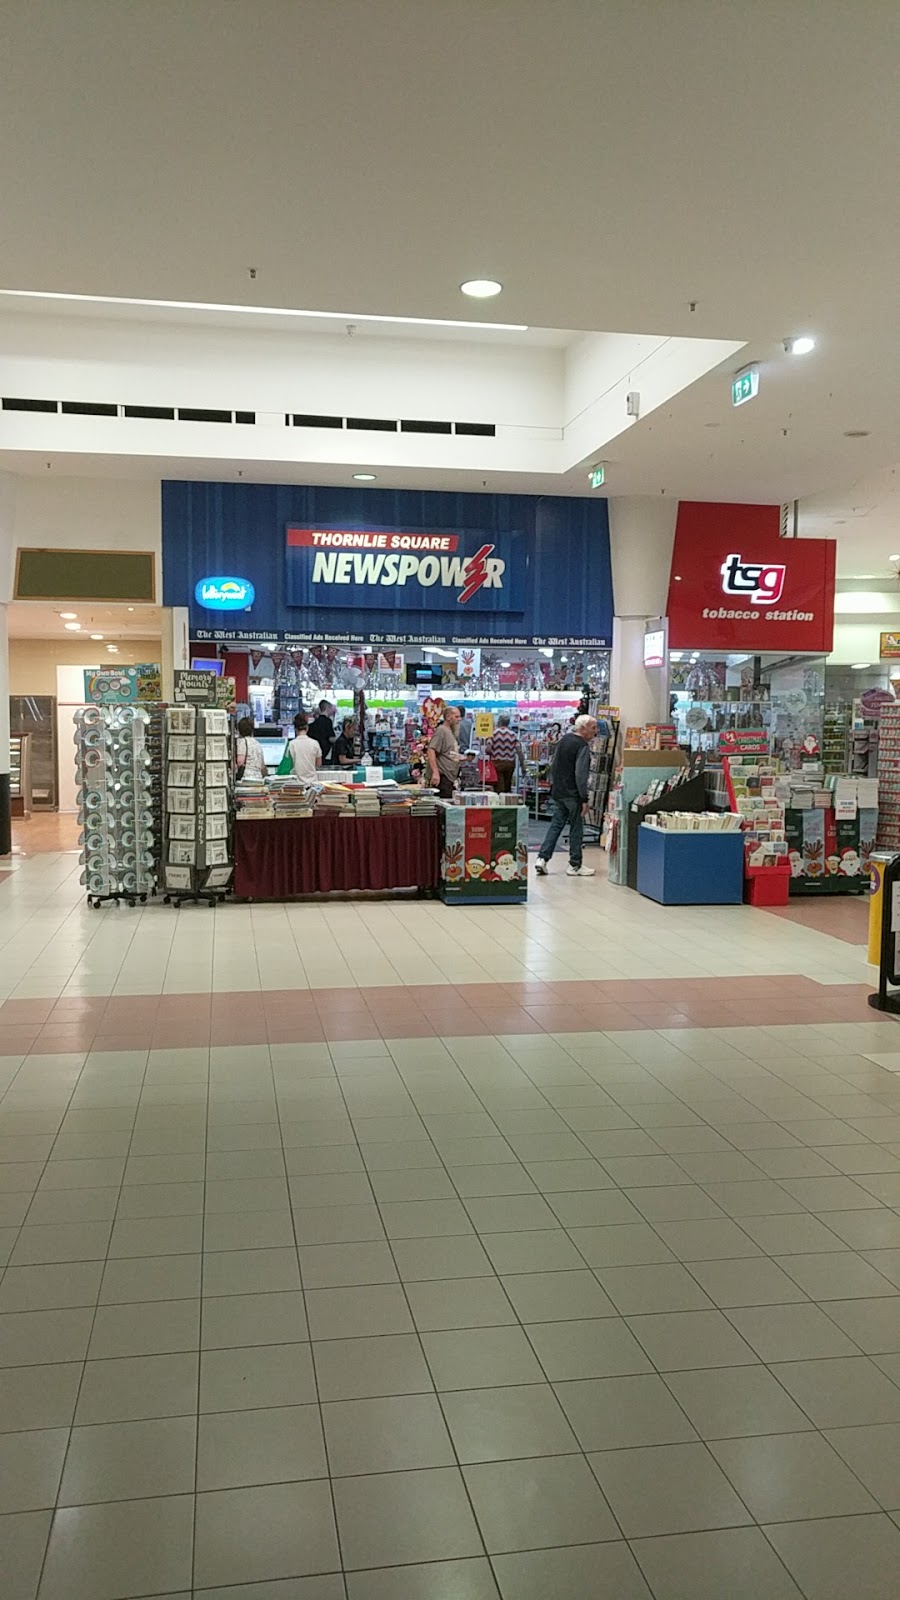 Thornlie Square Newspower | book store | Thornlie Square Shopping Centre, 330 Spencer Rd, Thornlie WA 6108, Australia | 0894932504 OR +61 8 9493 2504